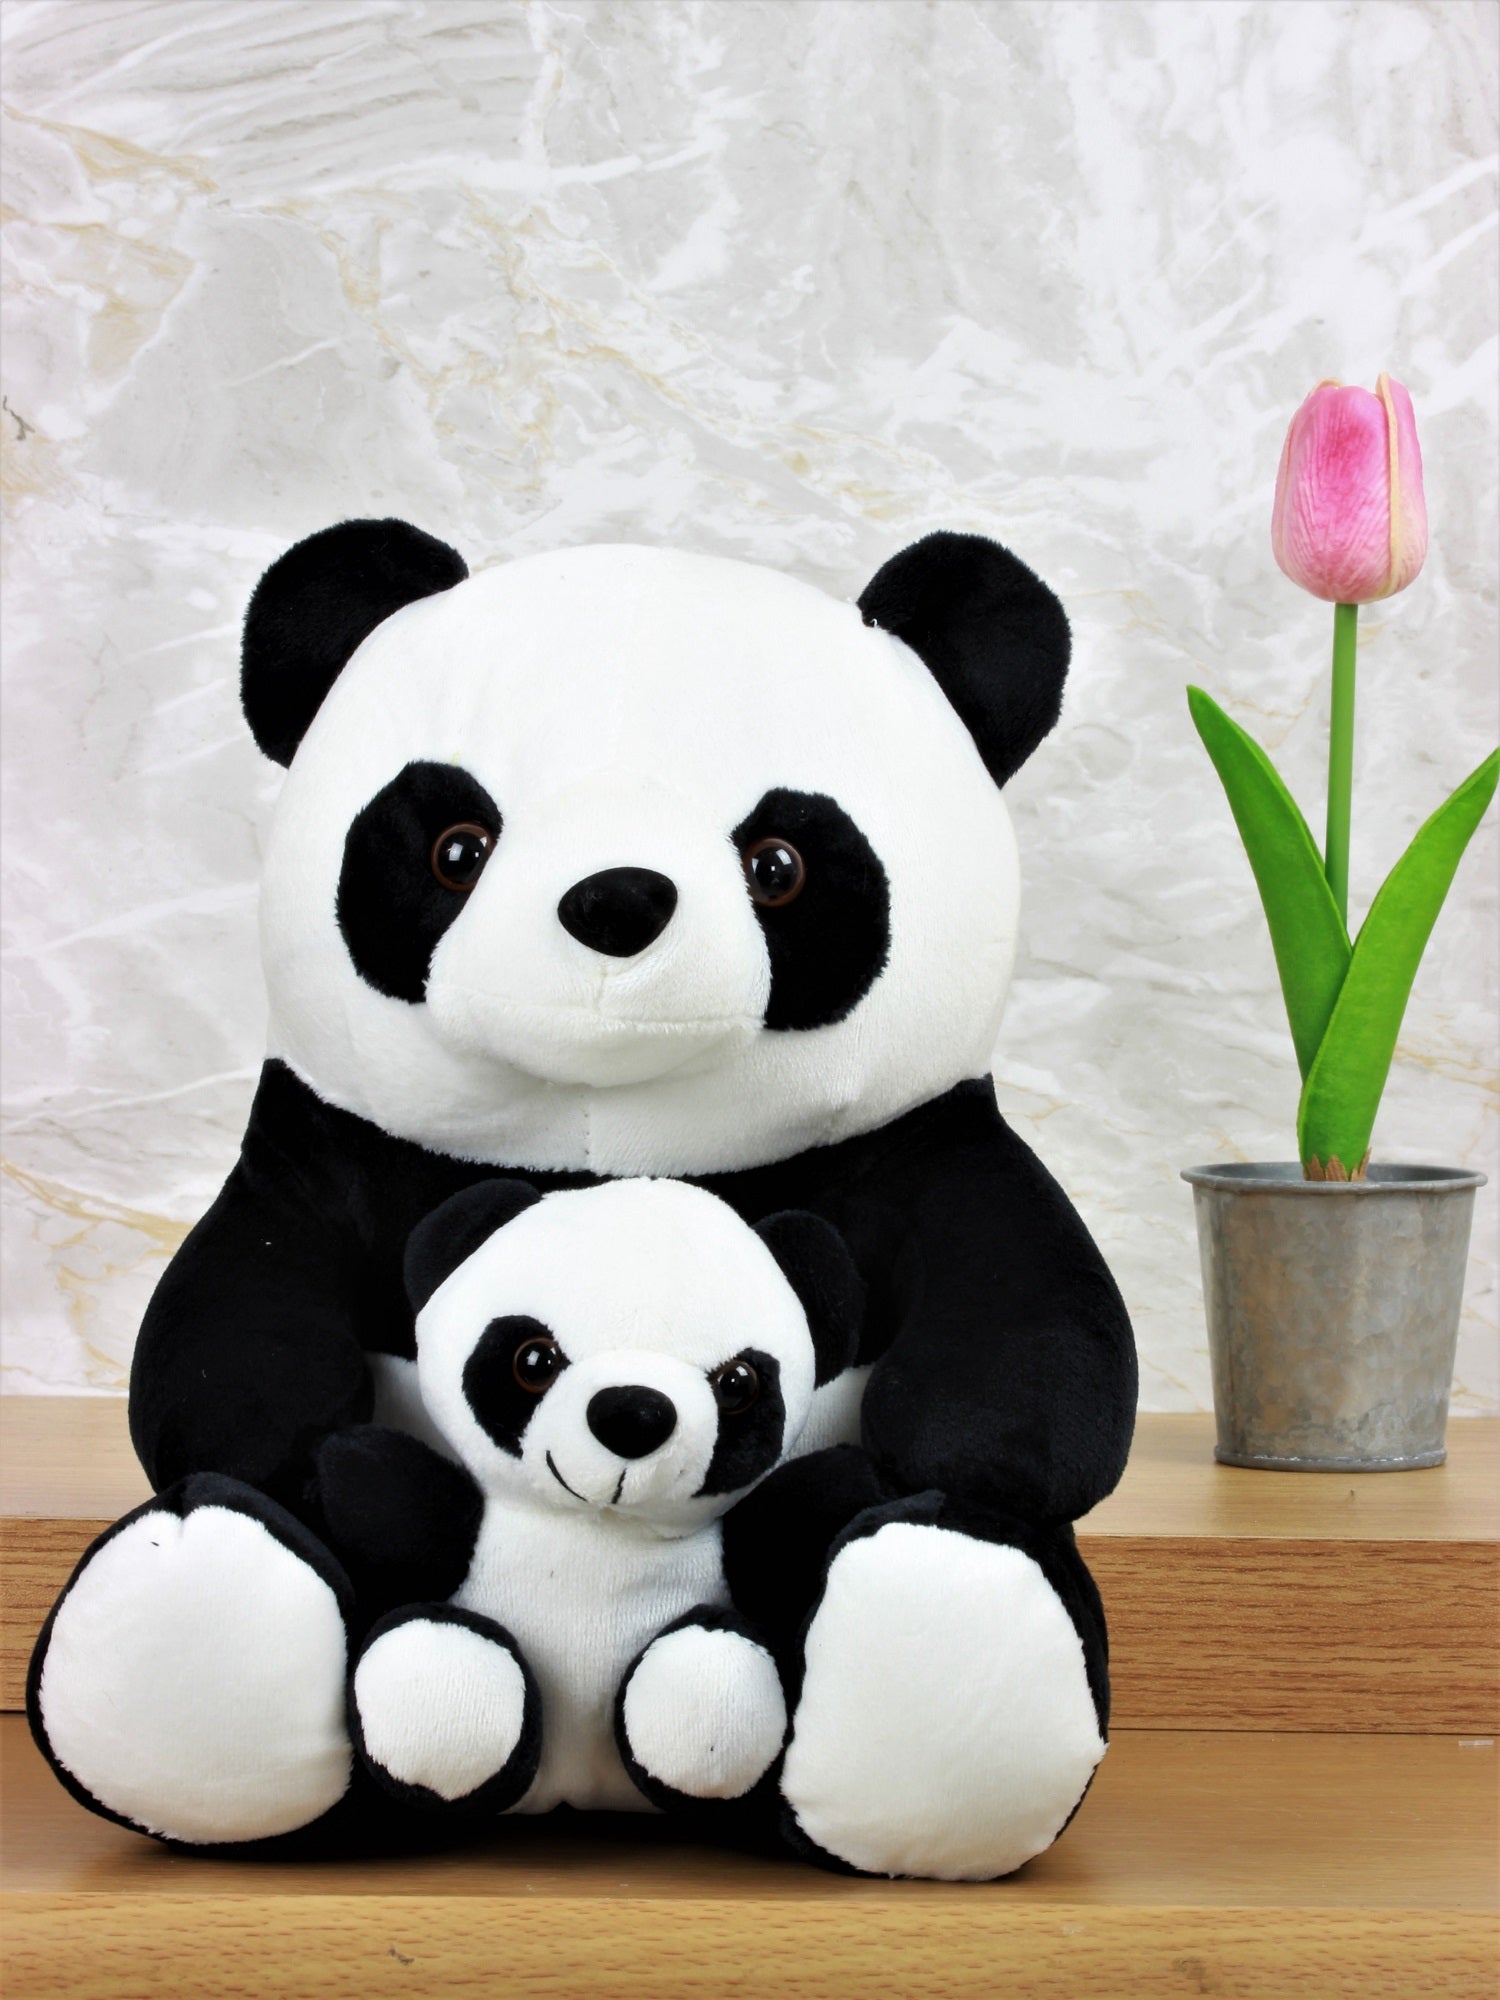 Adorable Black and White Panda Doorstop with Baby Home Door Stop Stopper Display